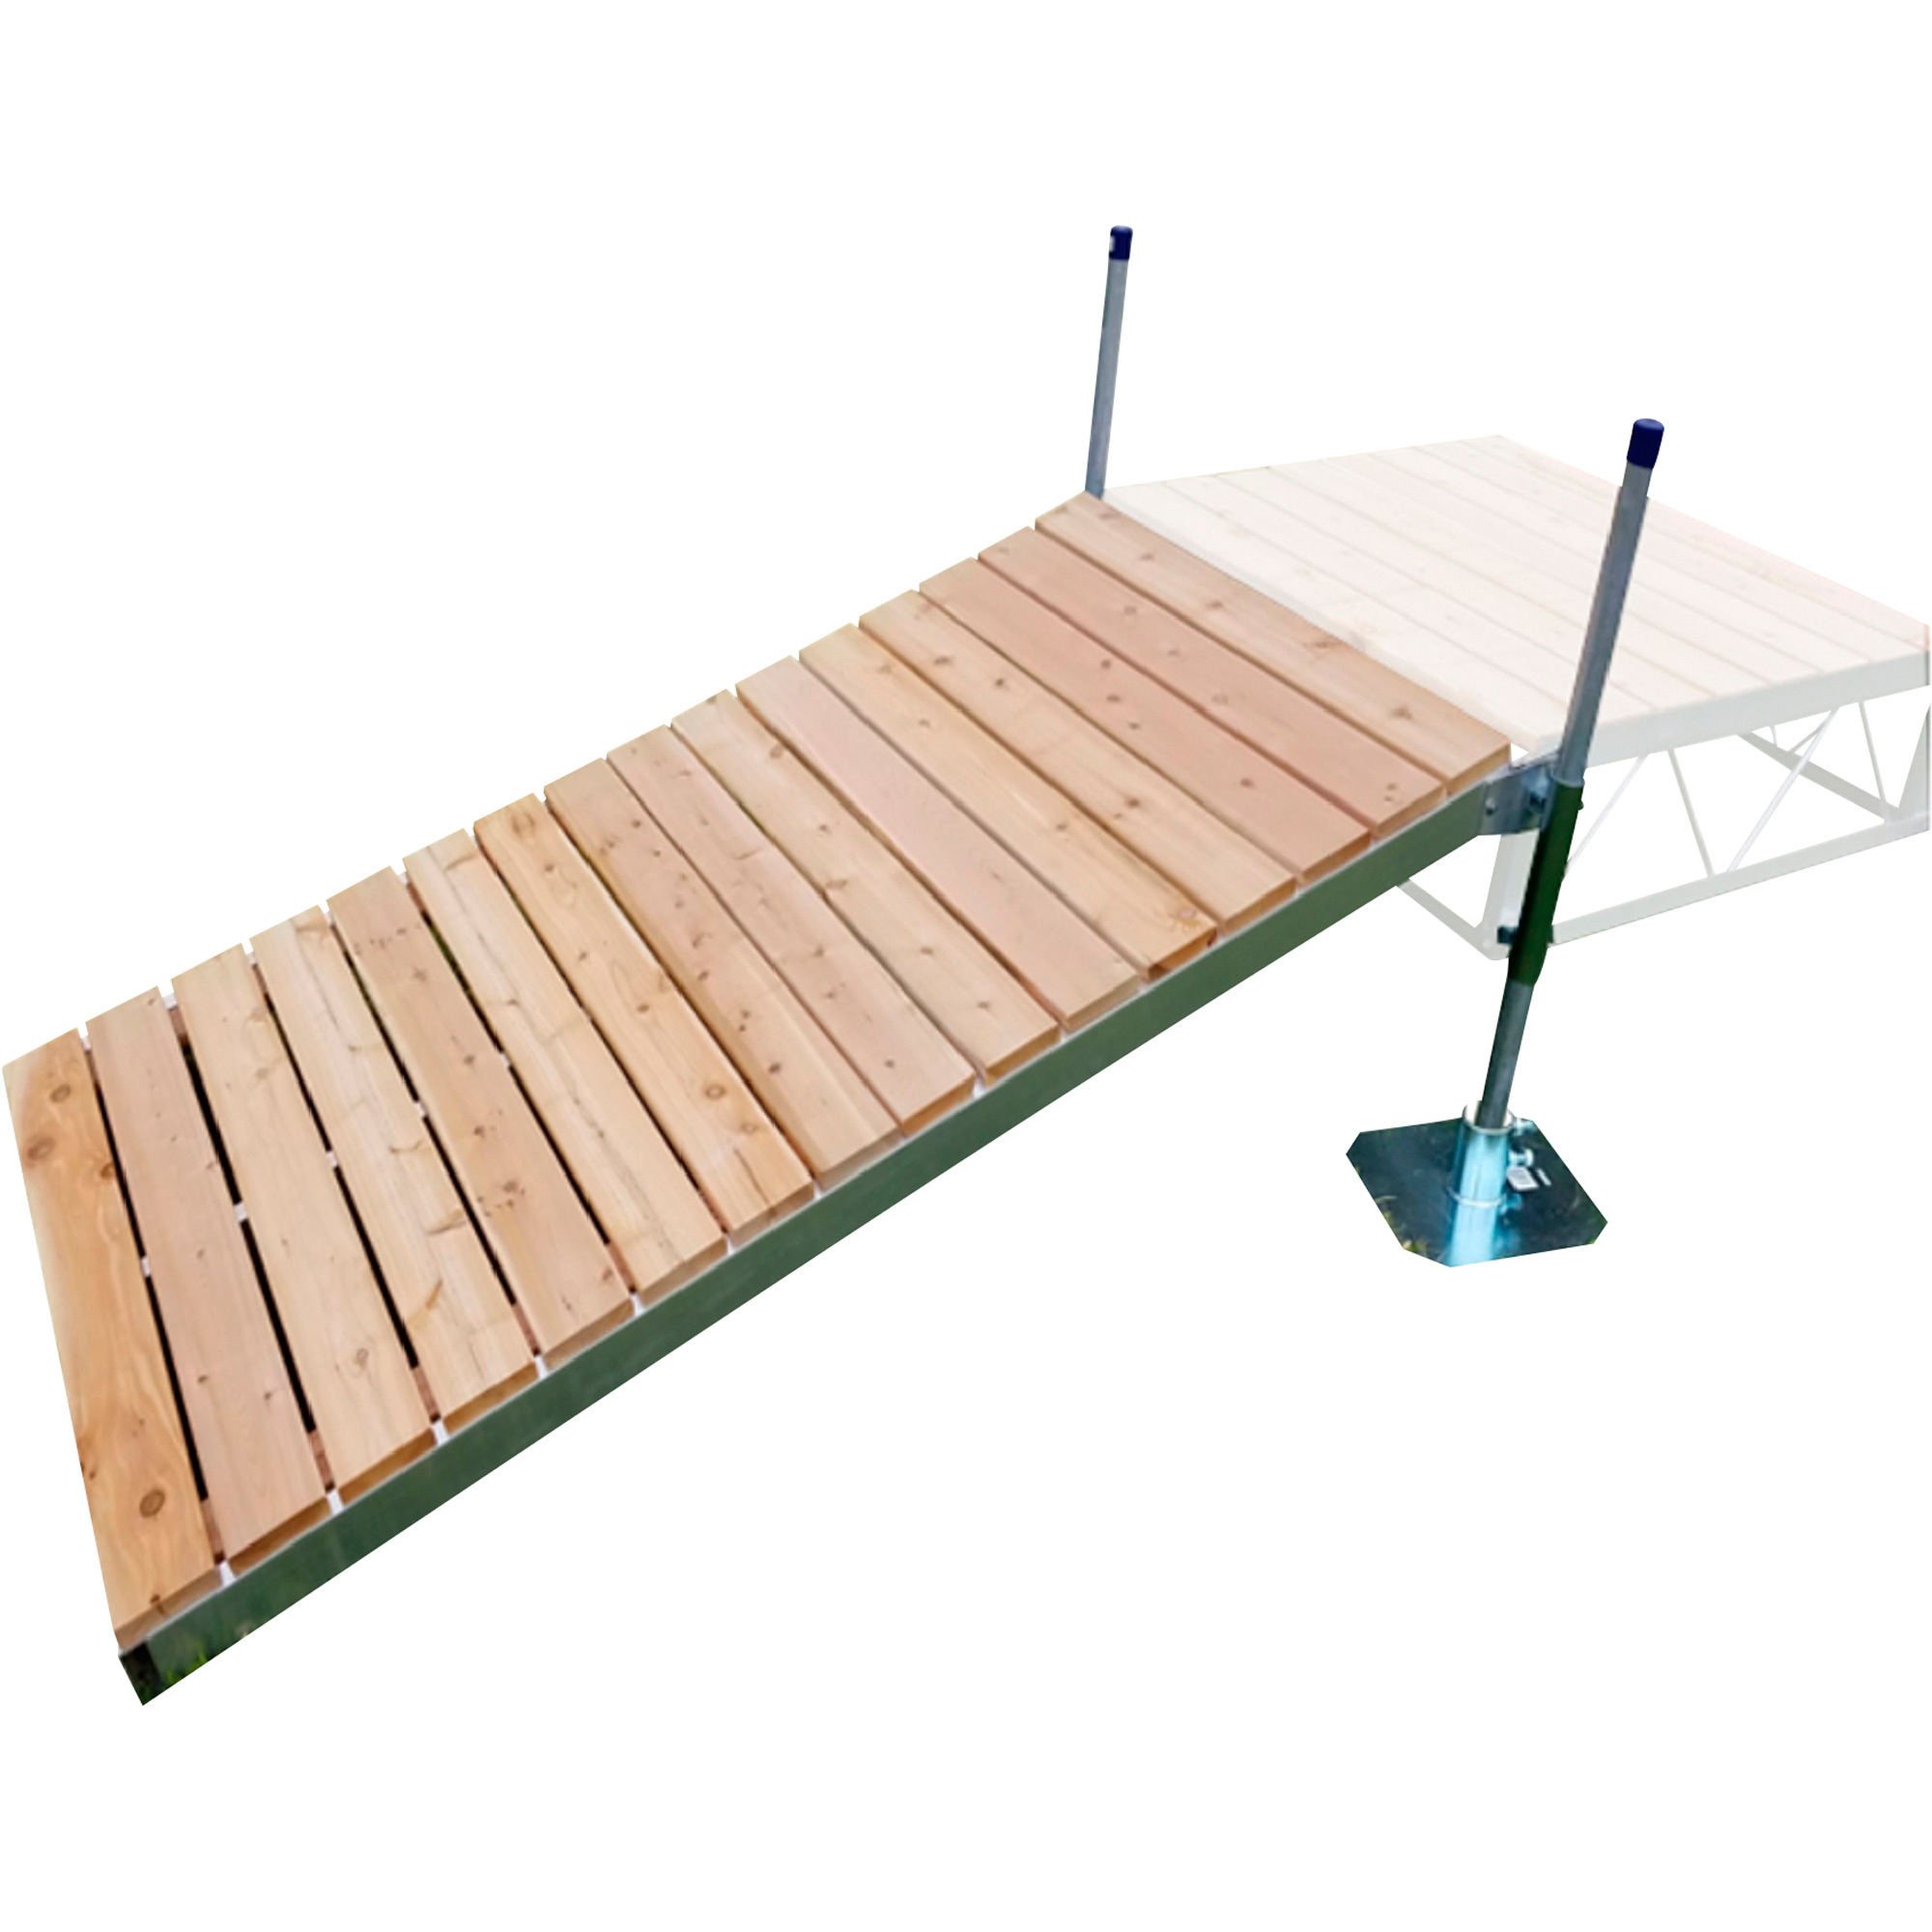 Patriot Docks 4ft. x 8ft. Universal Shore Ramp Kit â Cedar Deck Panel, Model 10350